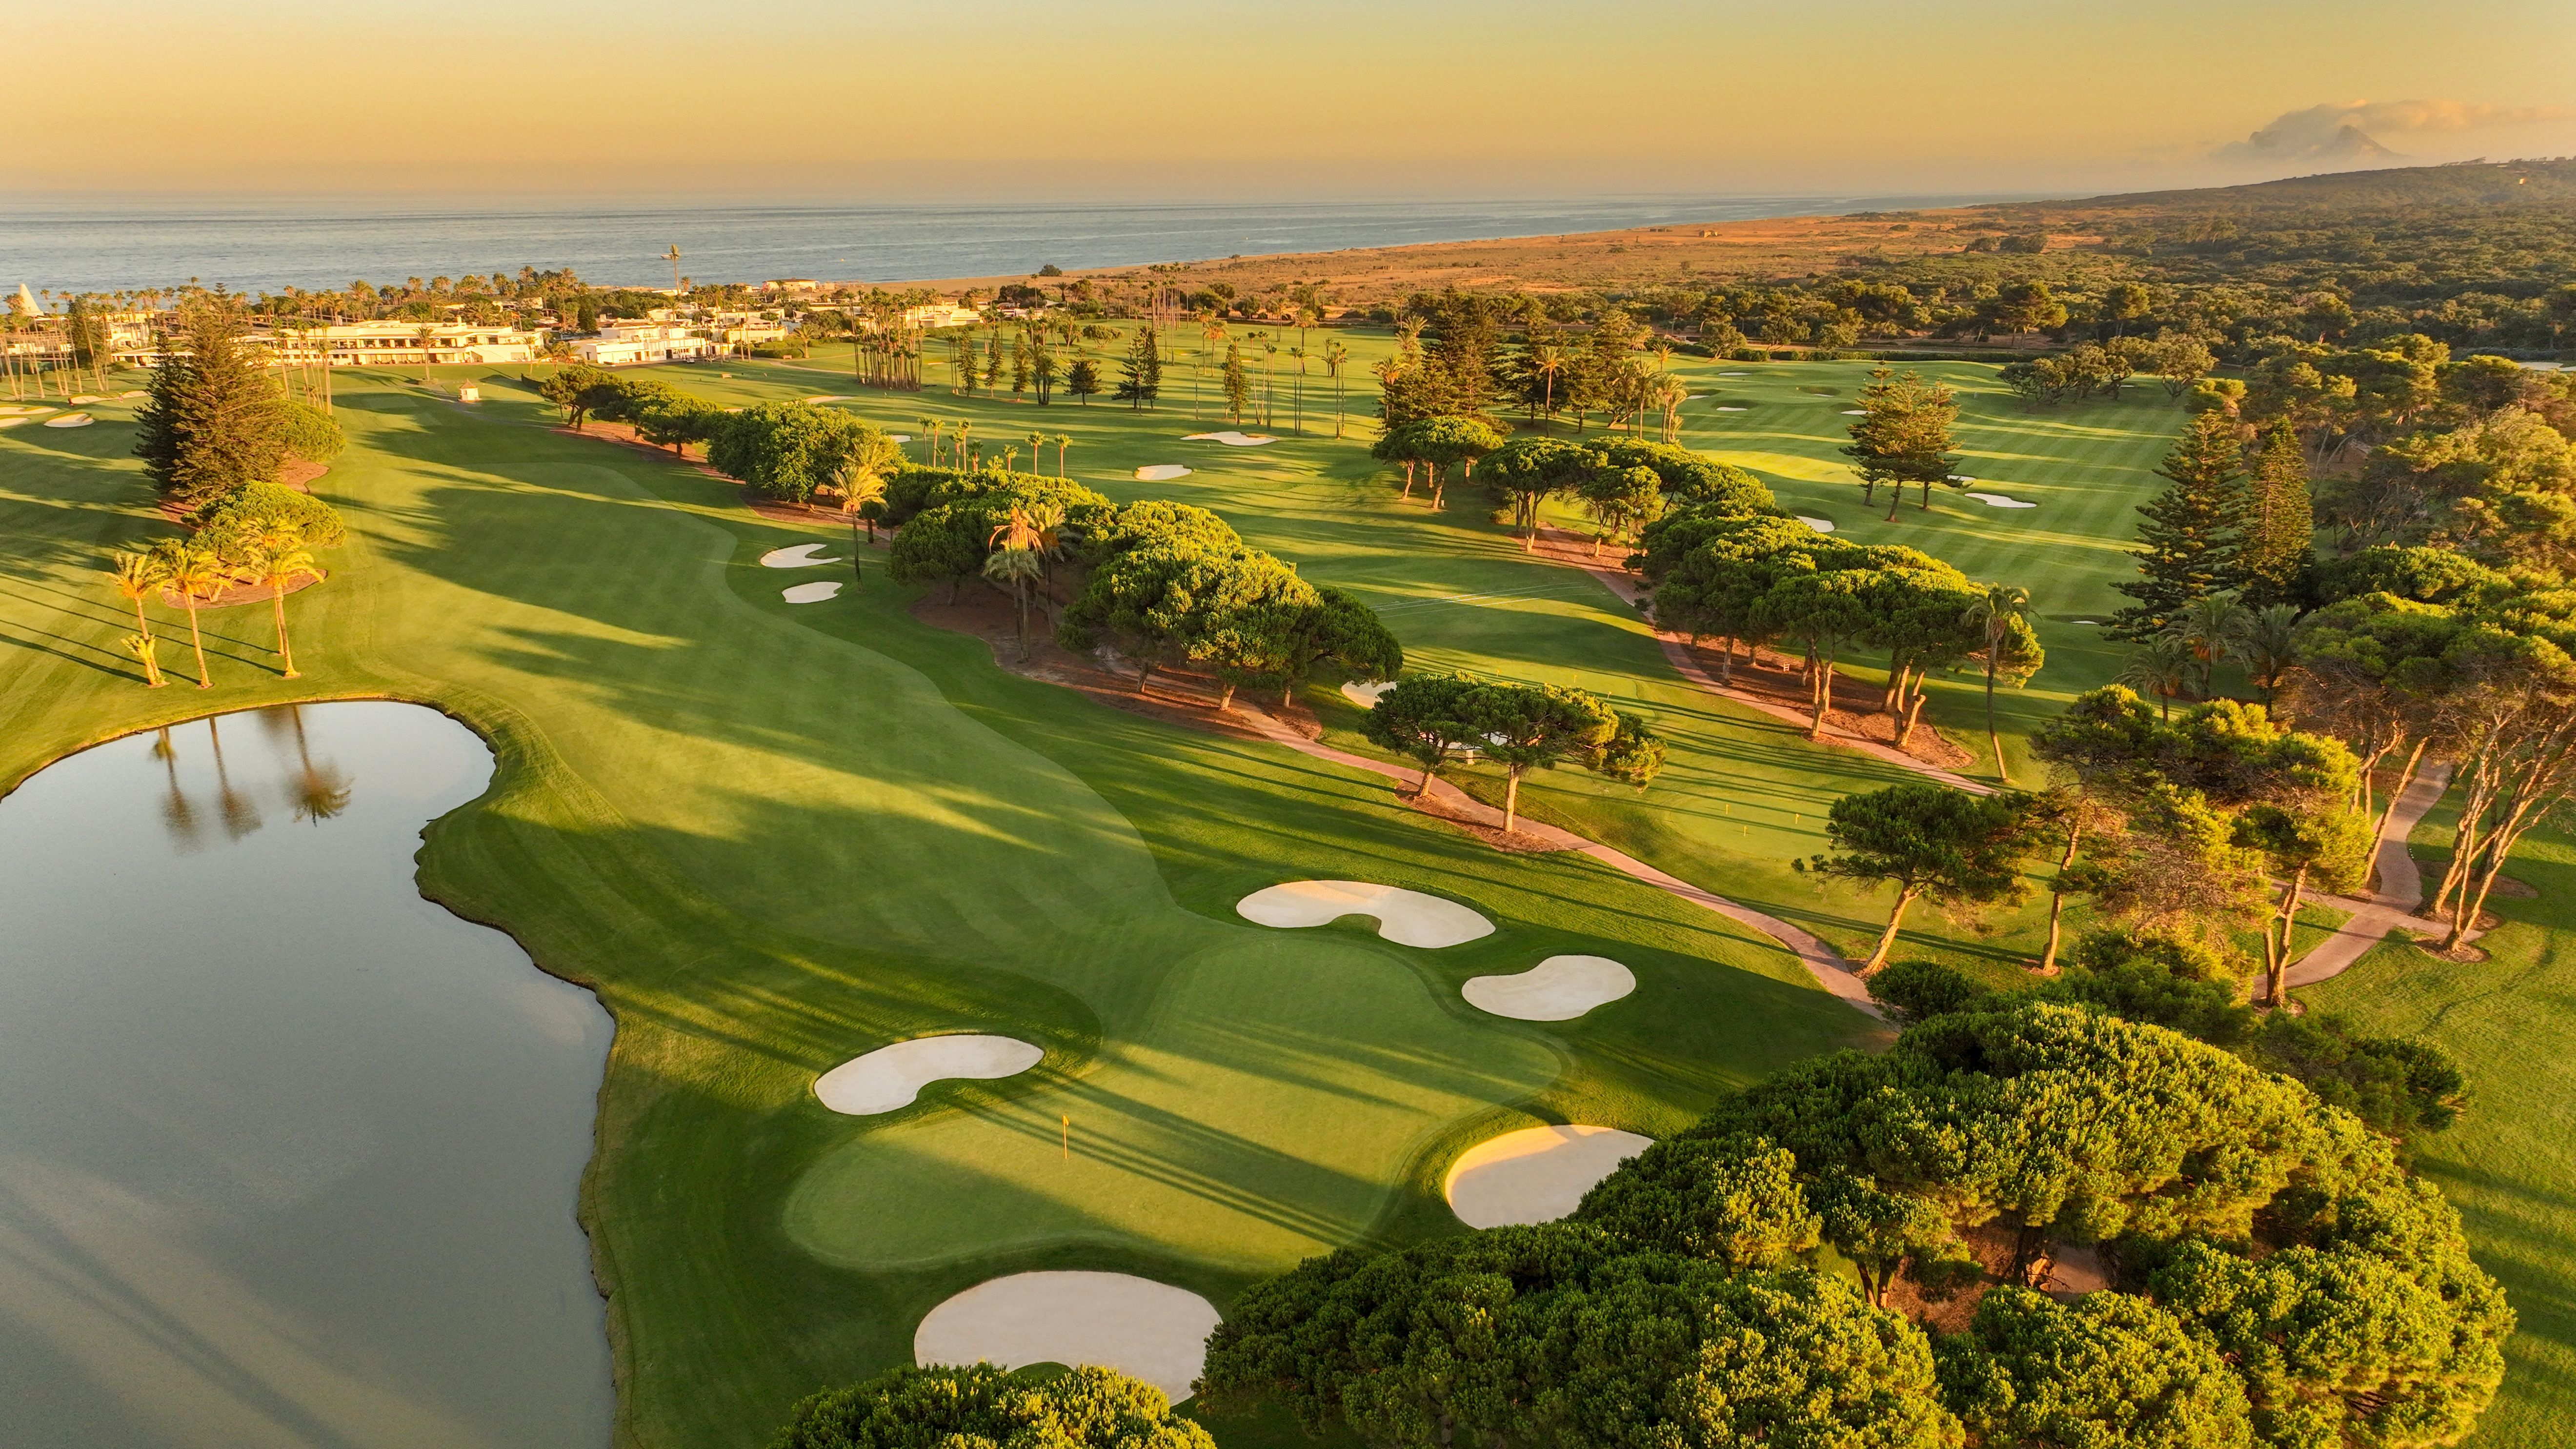 Real Club de Golf Sotogrande - Top 100 Golf Courses of Europe | Top 100 Golf Courses